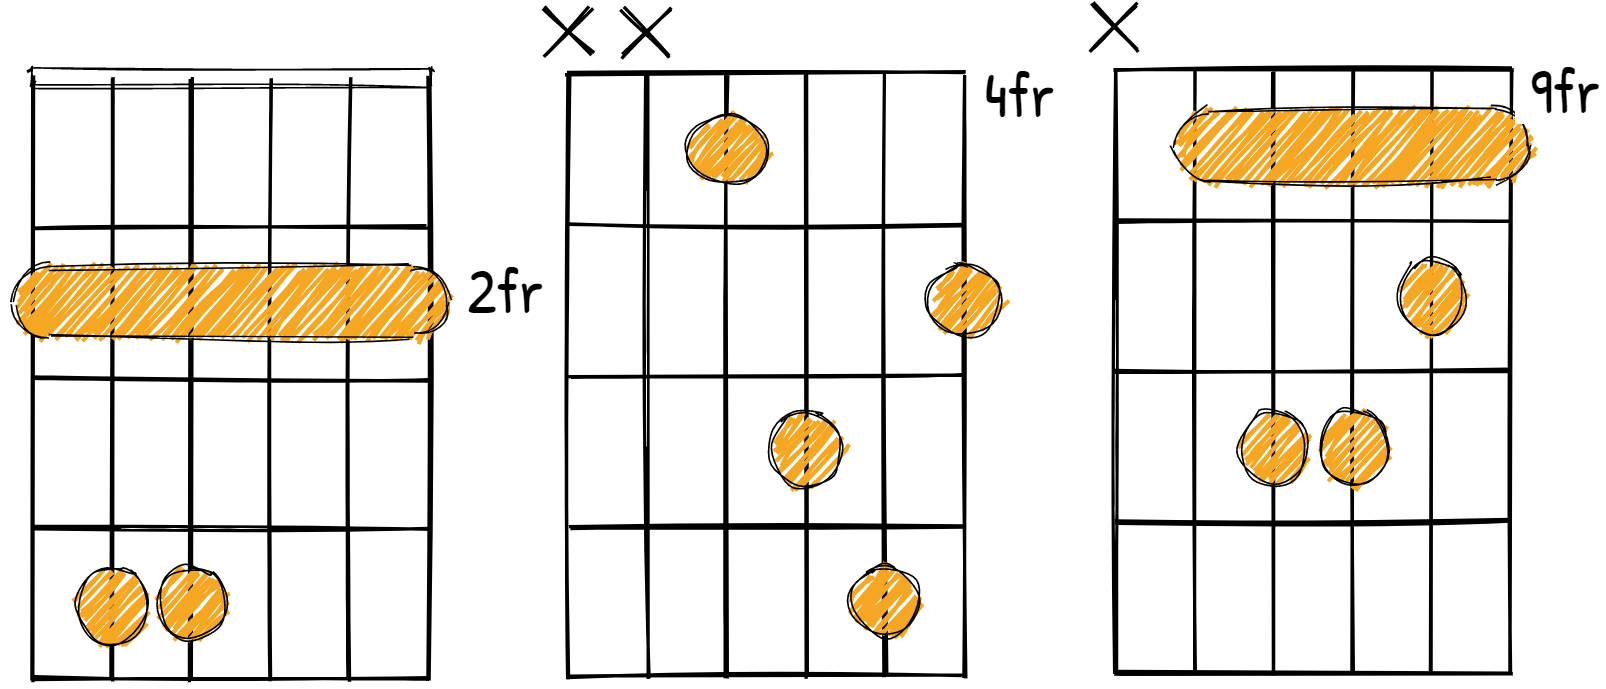 F# minor chord diagrams